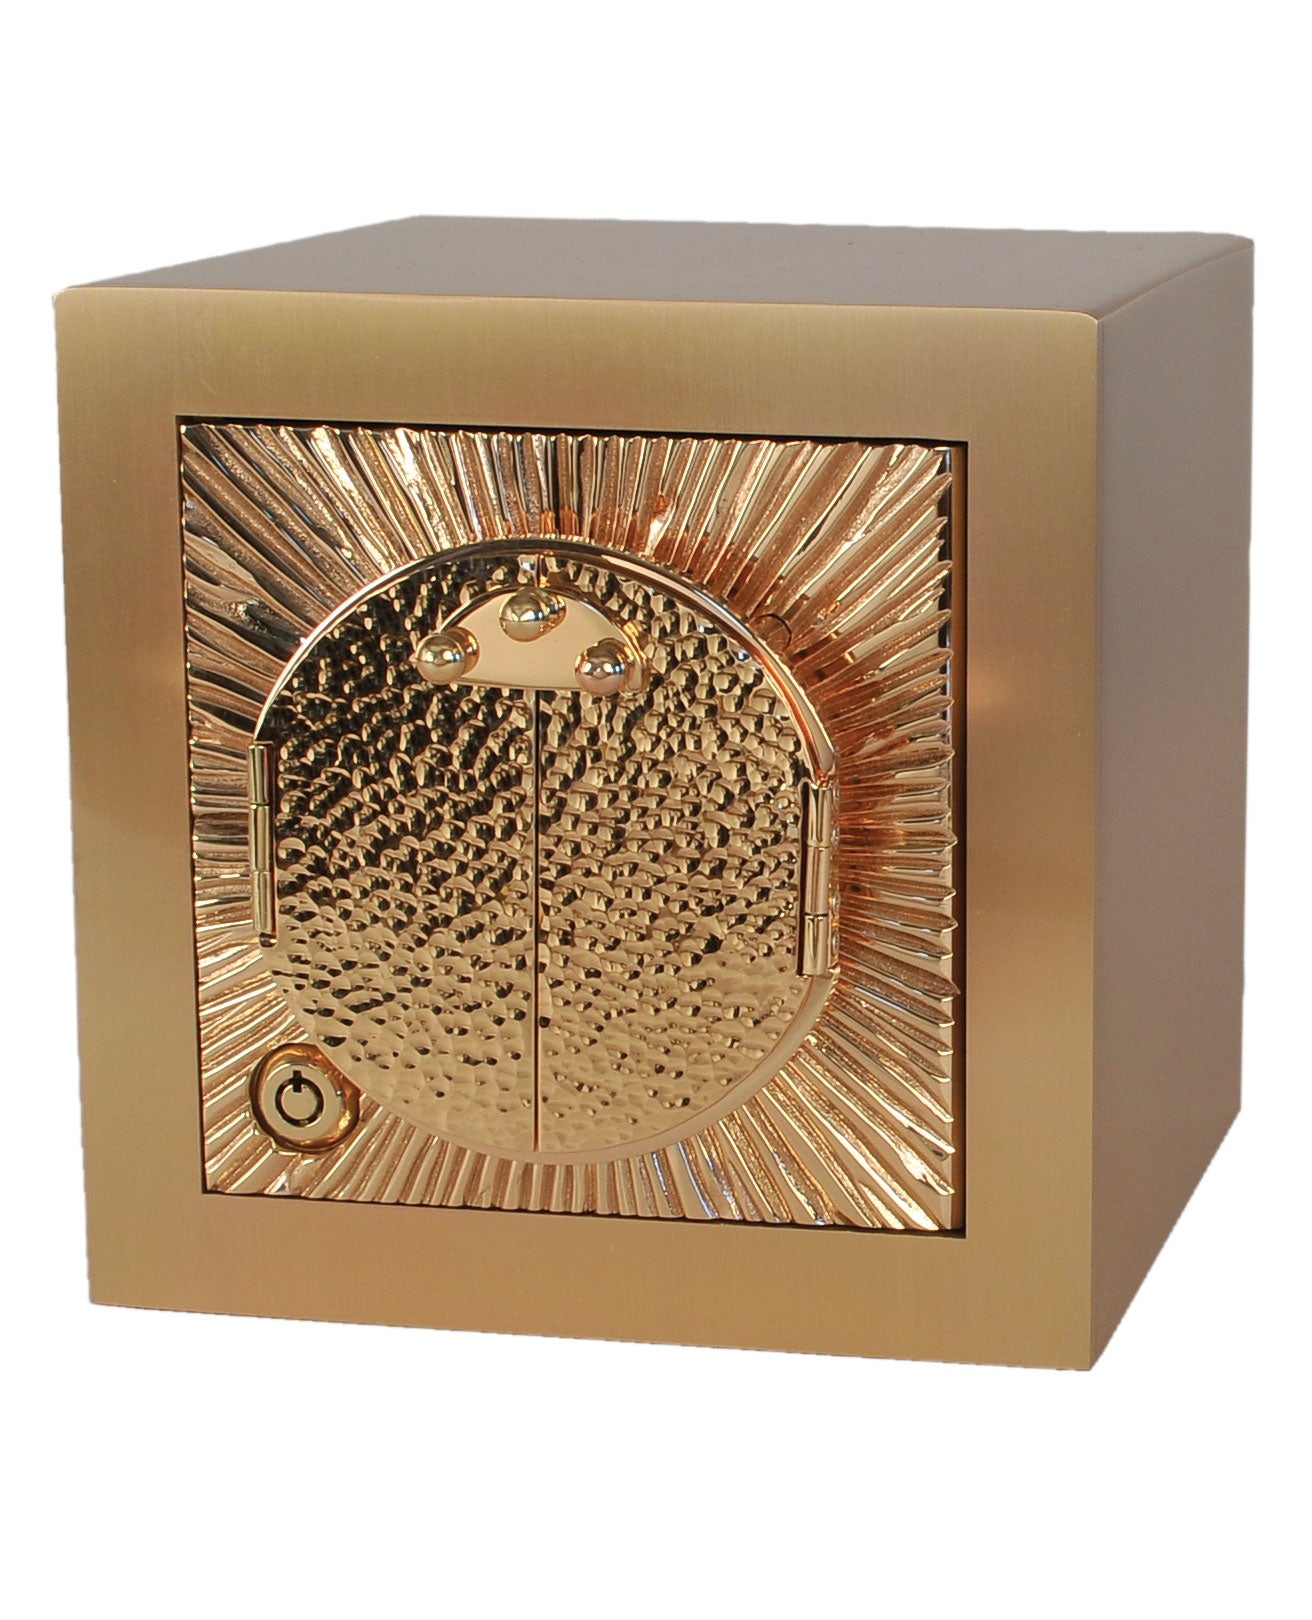 solid-bronze-exposition-tabernacle-37tab30.jpg